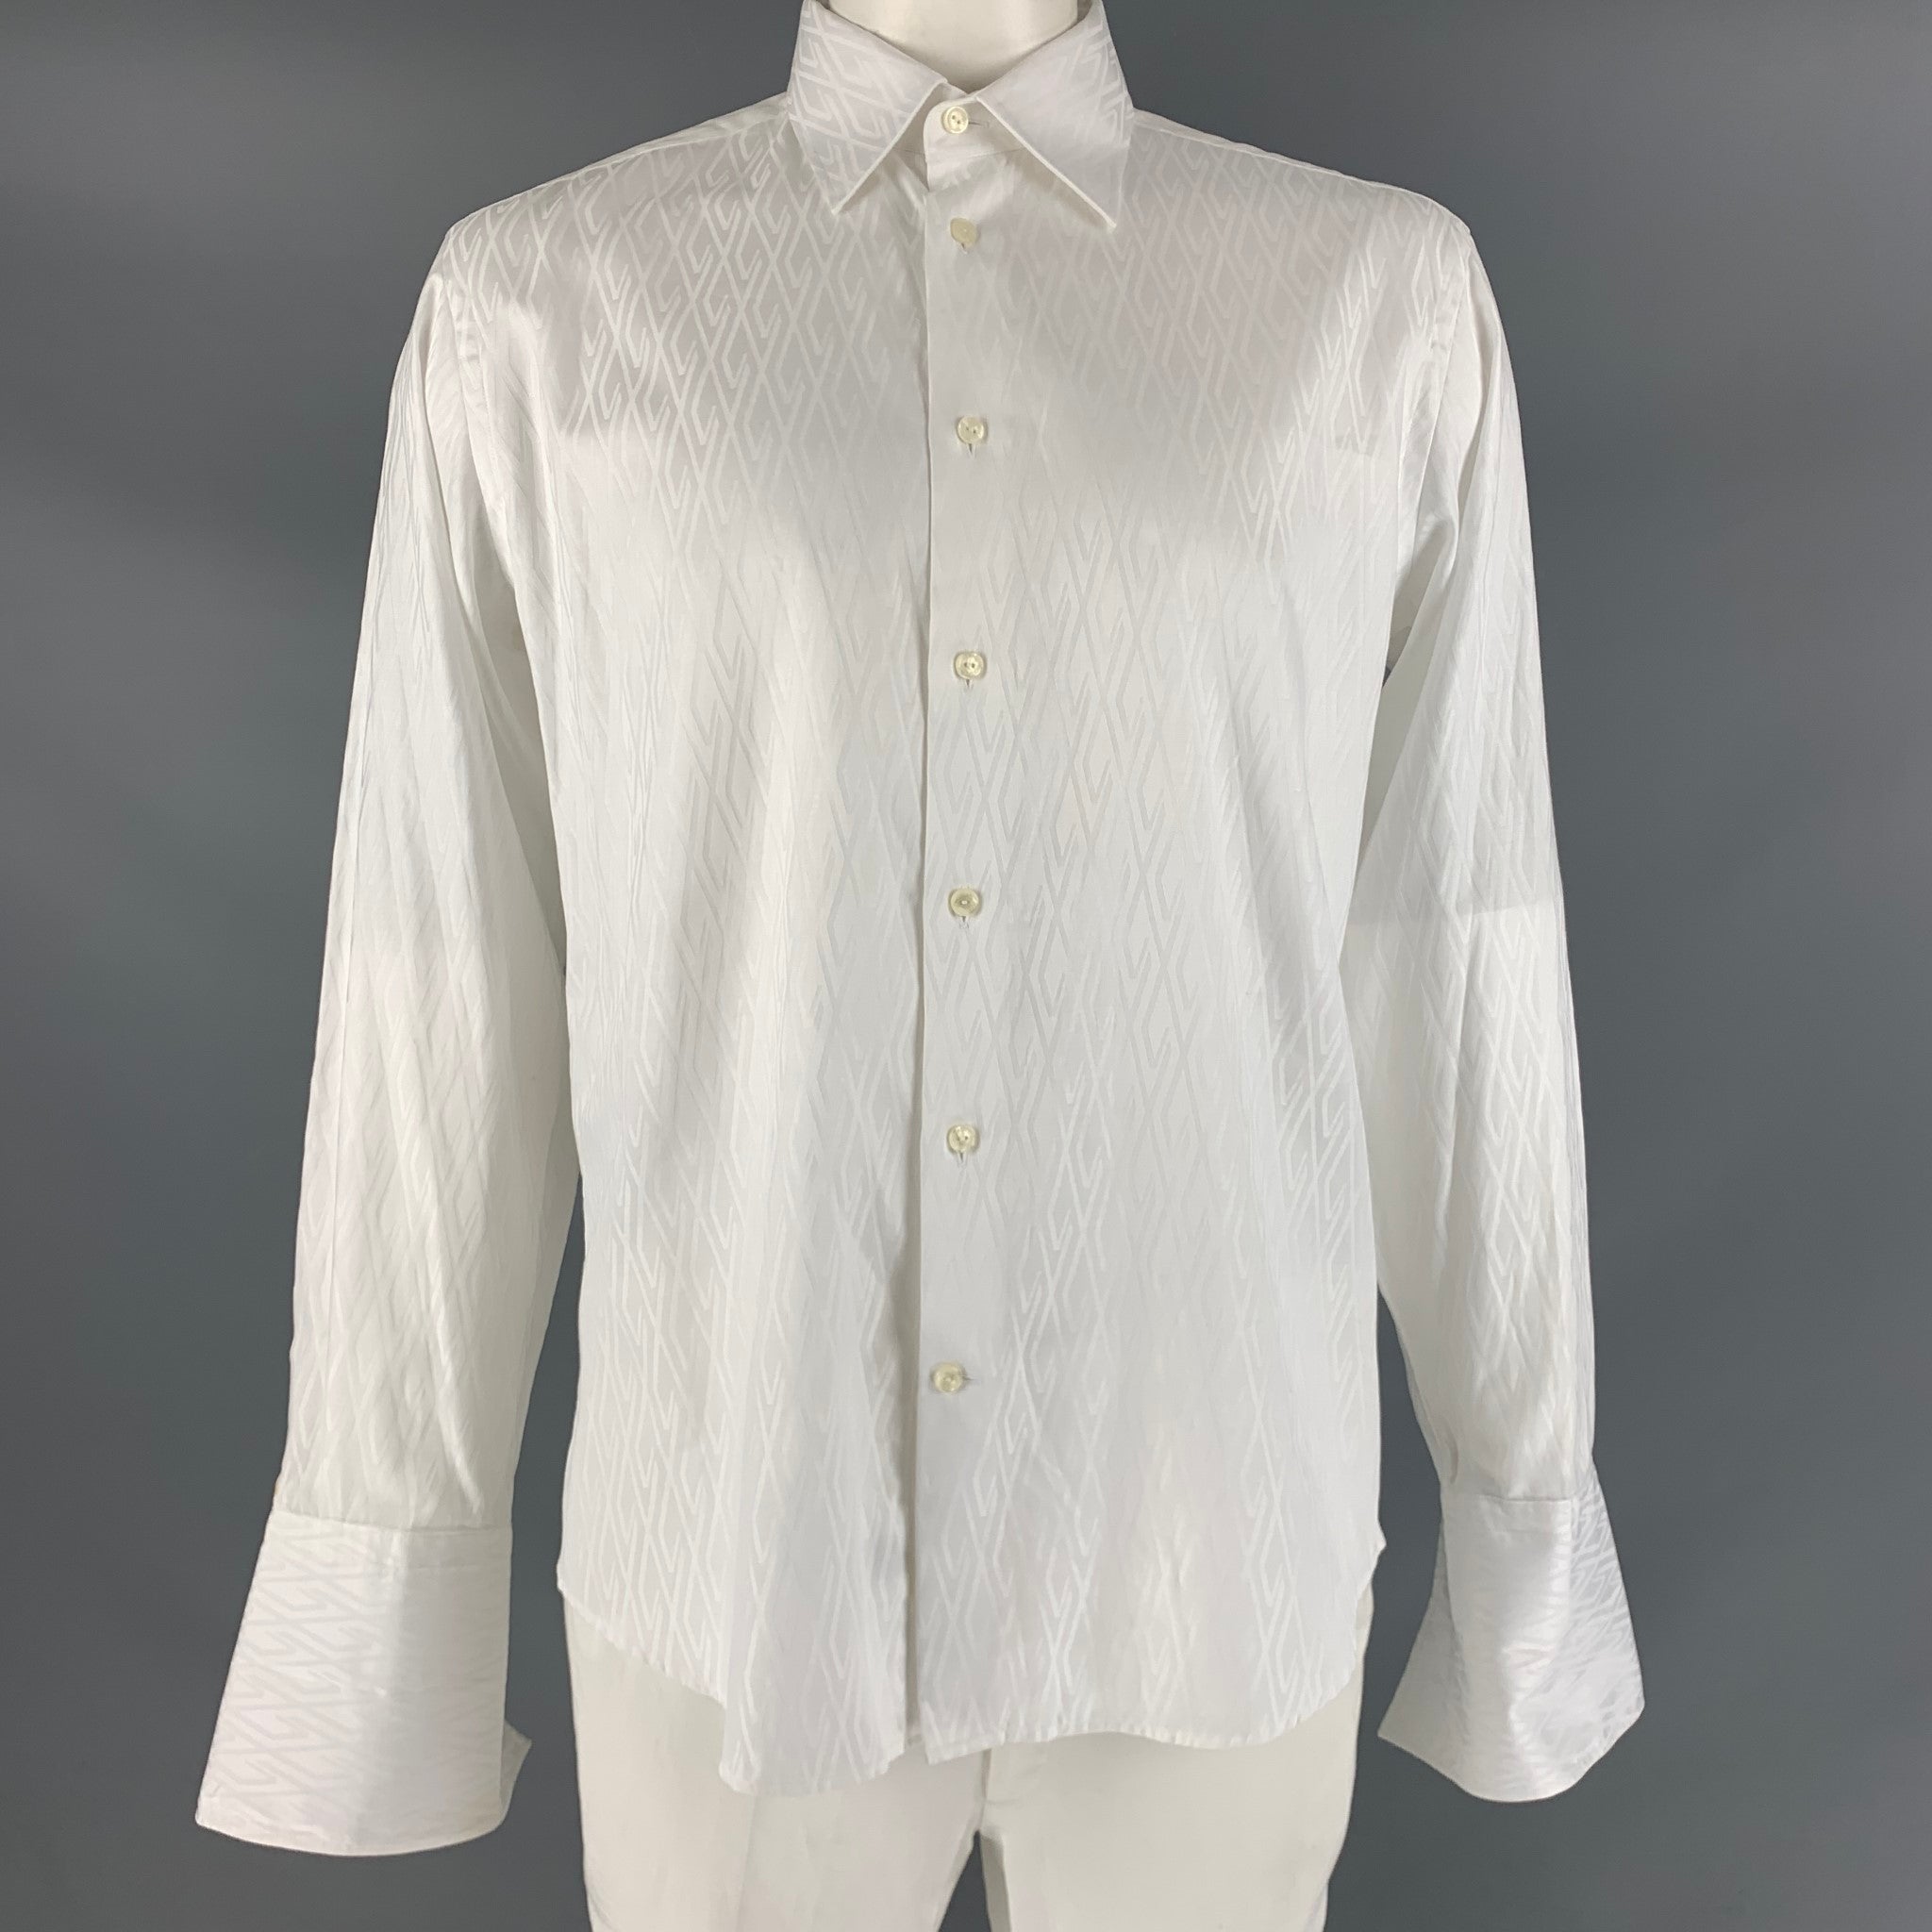 Louis Vuitton - Authenticated Polo Shirt - Cotton Black Plain for Men, Very Good Condition